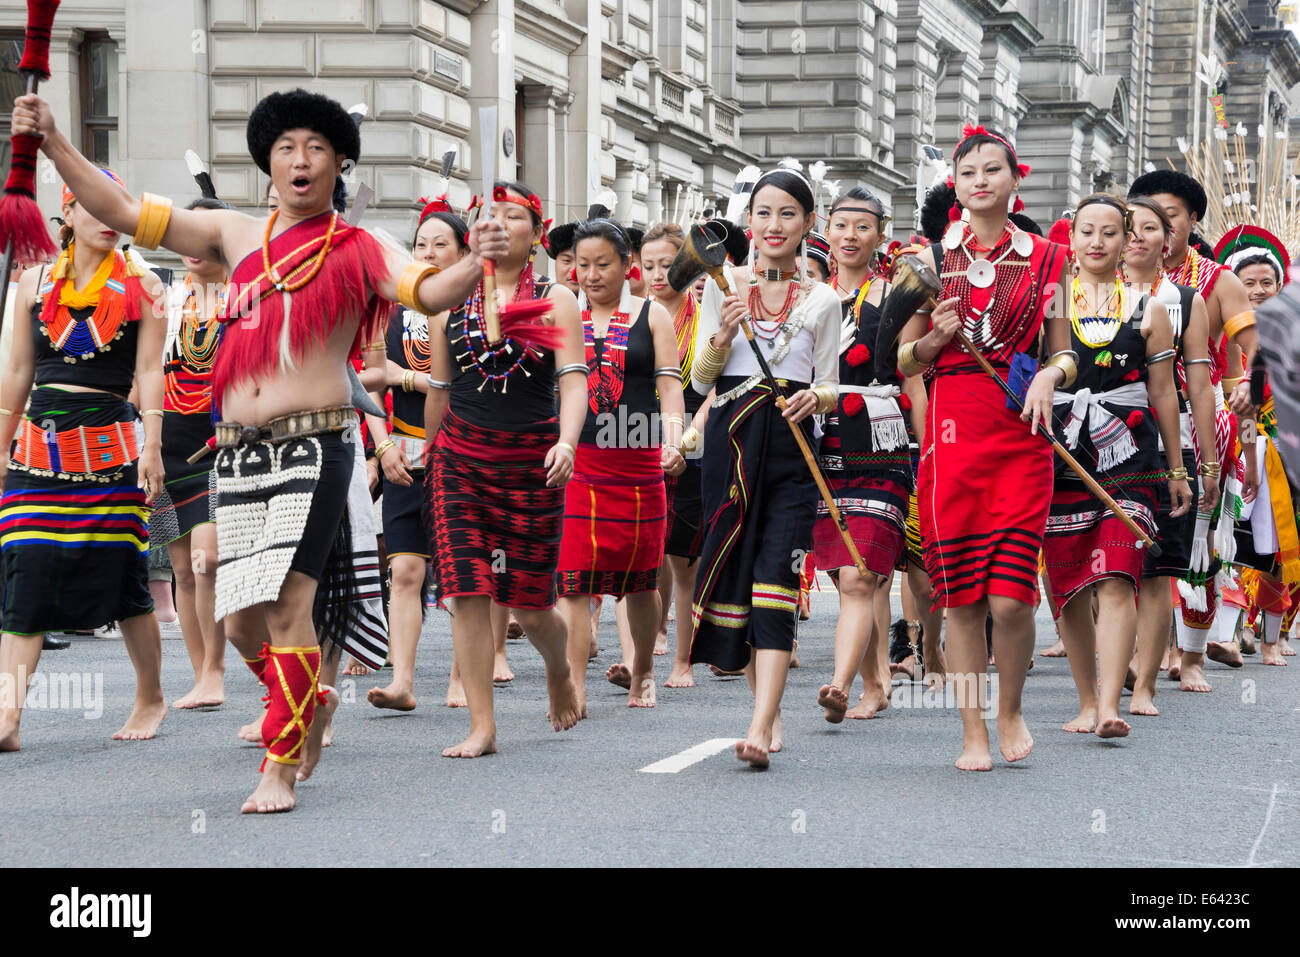 Nagaland Folkloric Dancers marschieren durch George Square Glasgow. Stockfoto